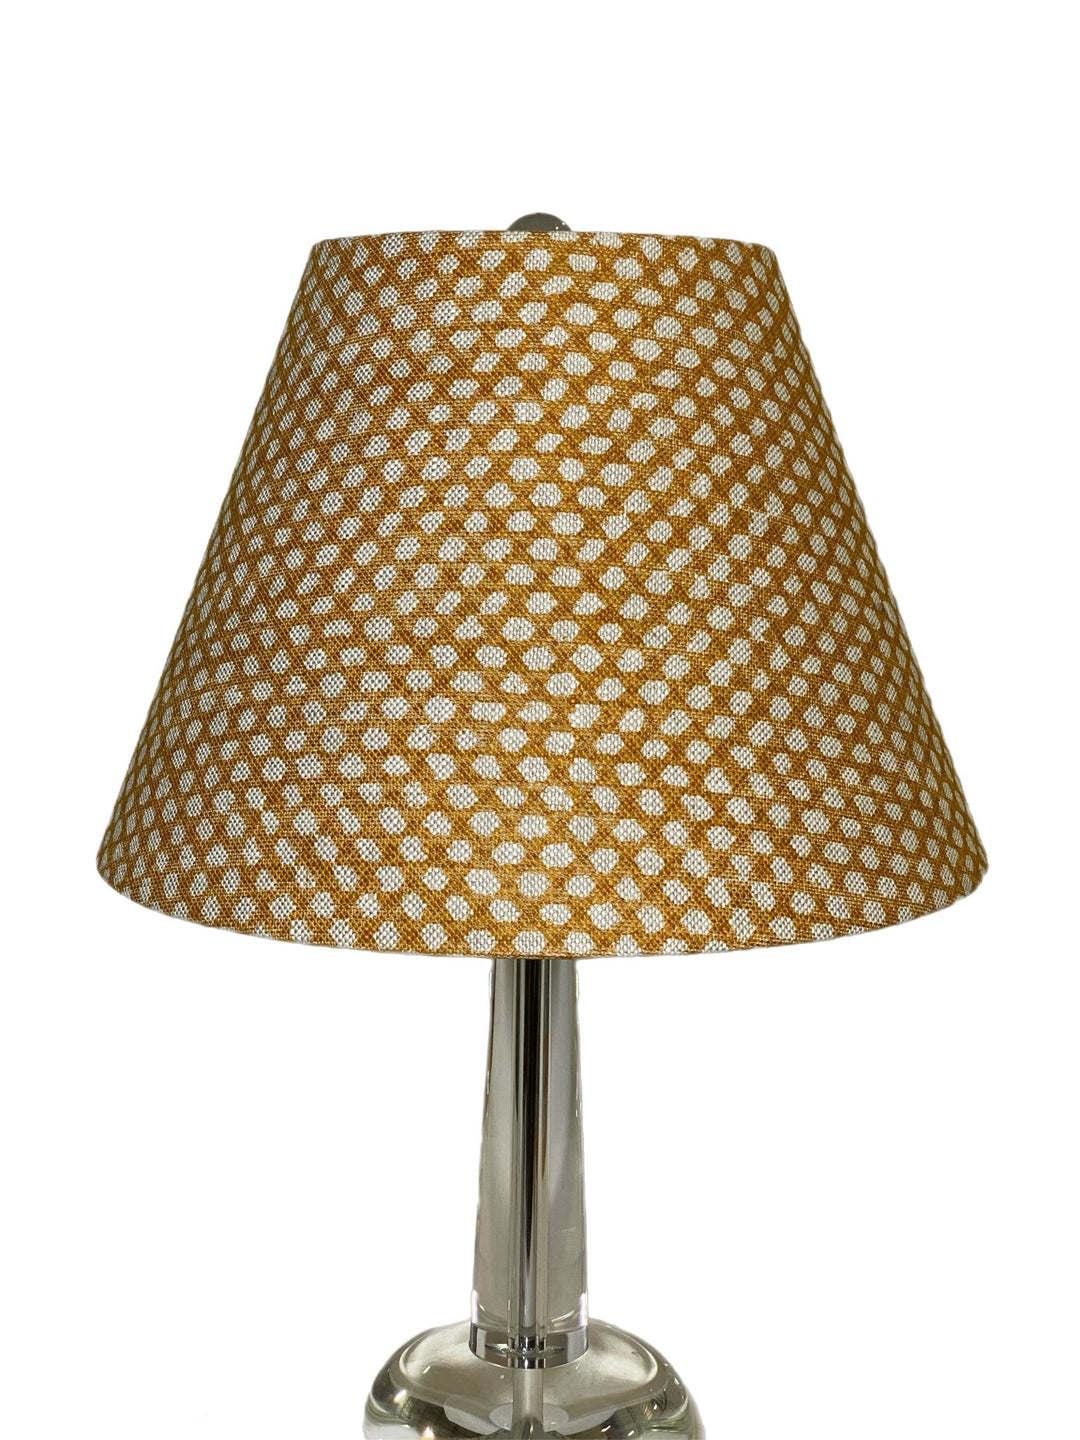 Custom Hardback Empire Shades Made using Fermoie Fabric - 16" and 18" base - Lux Lamp Shades